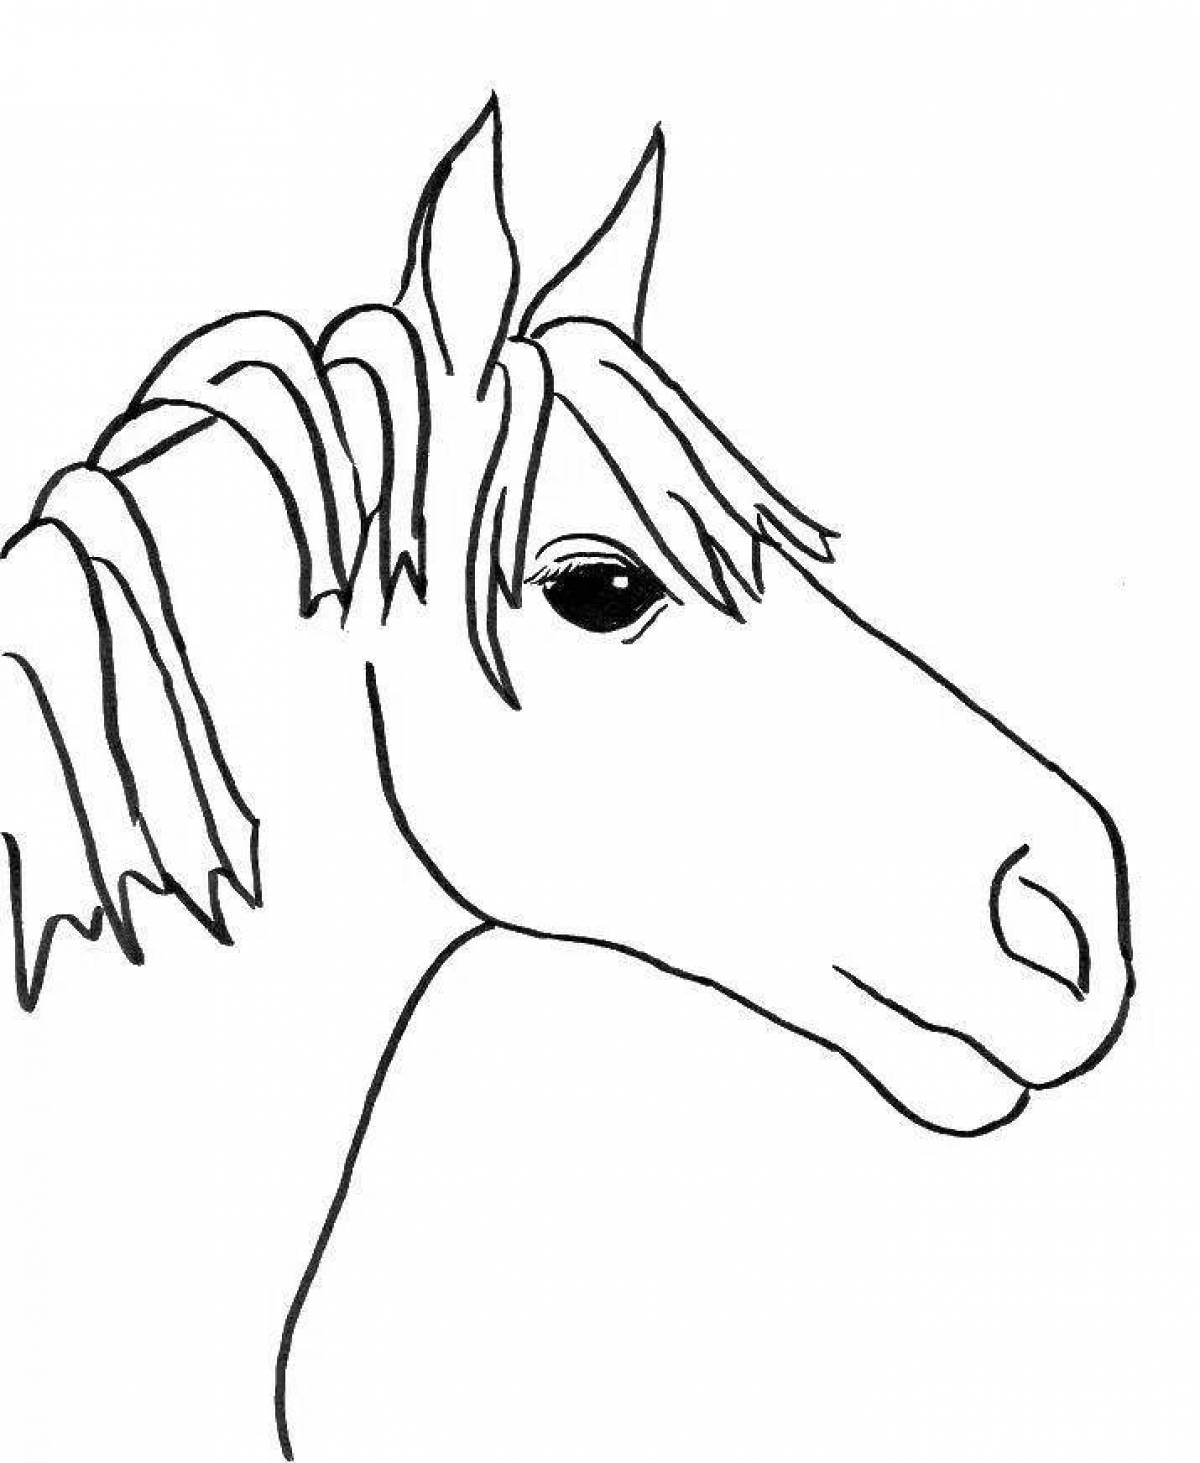 Элегантная раскраска голова лошади